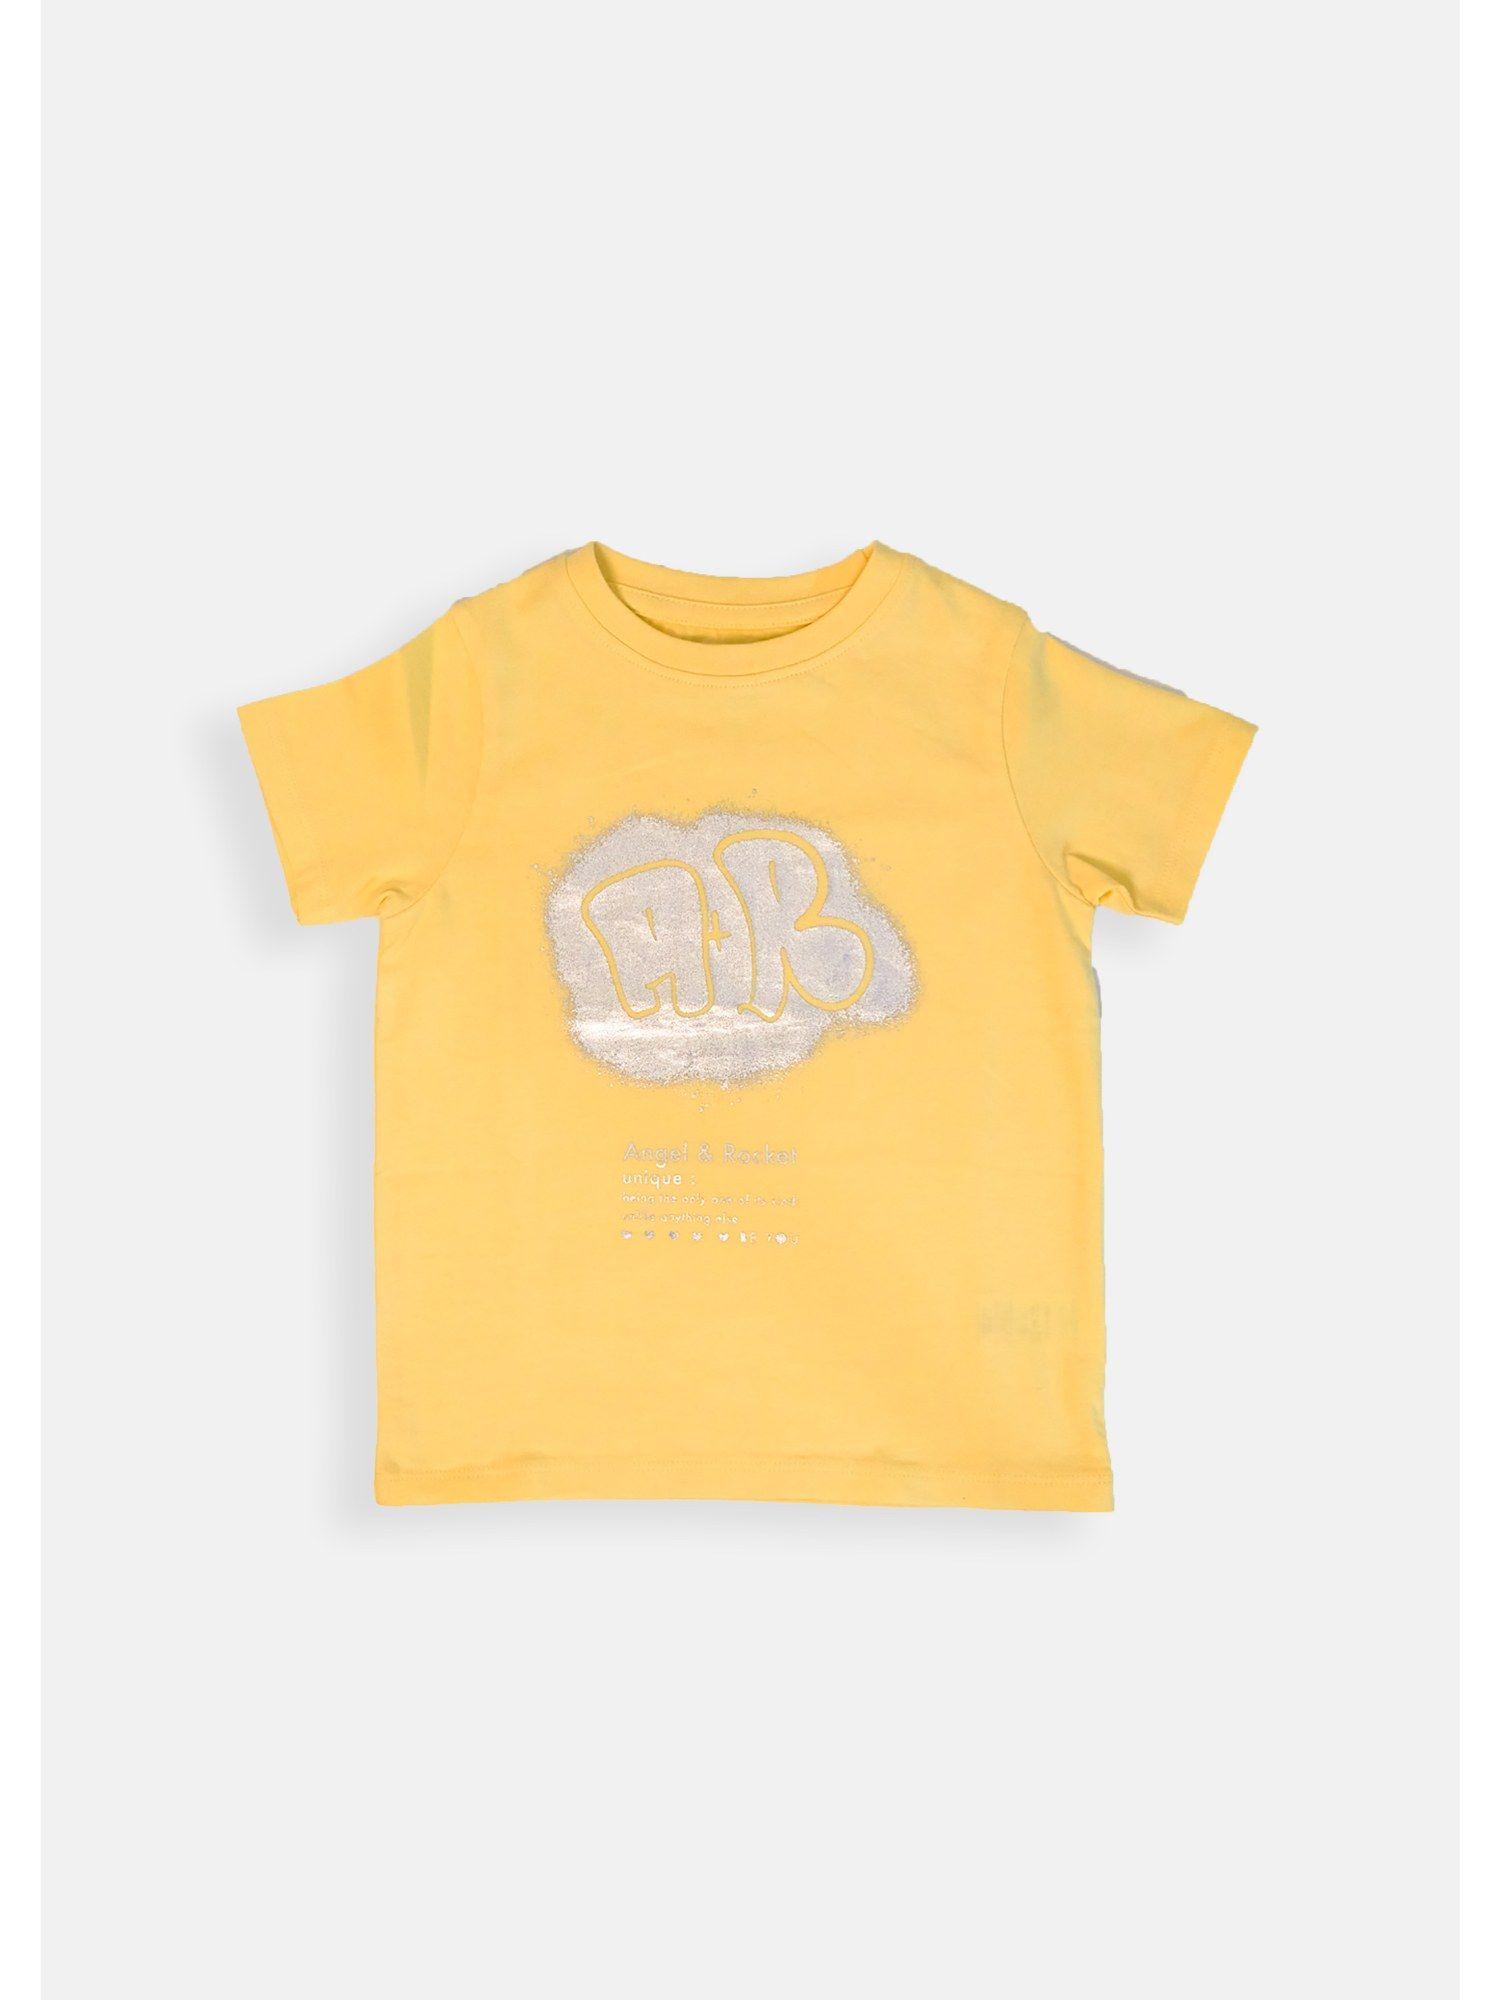 printed yellow t-shirt